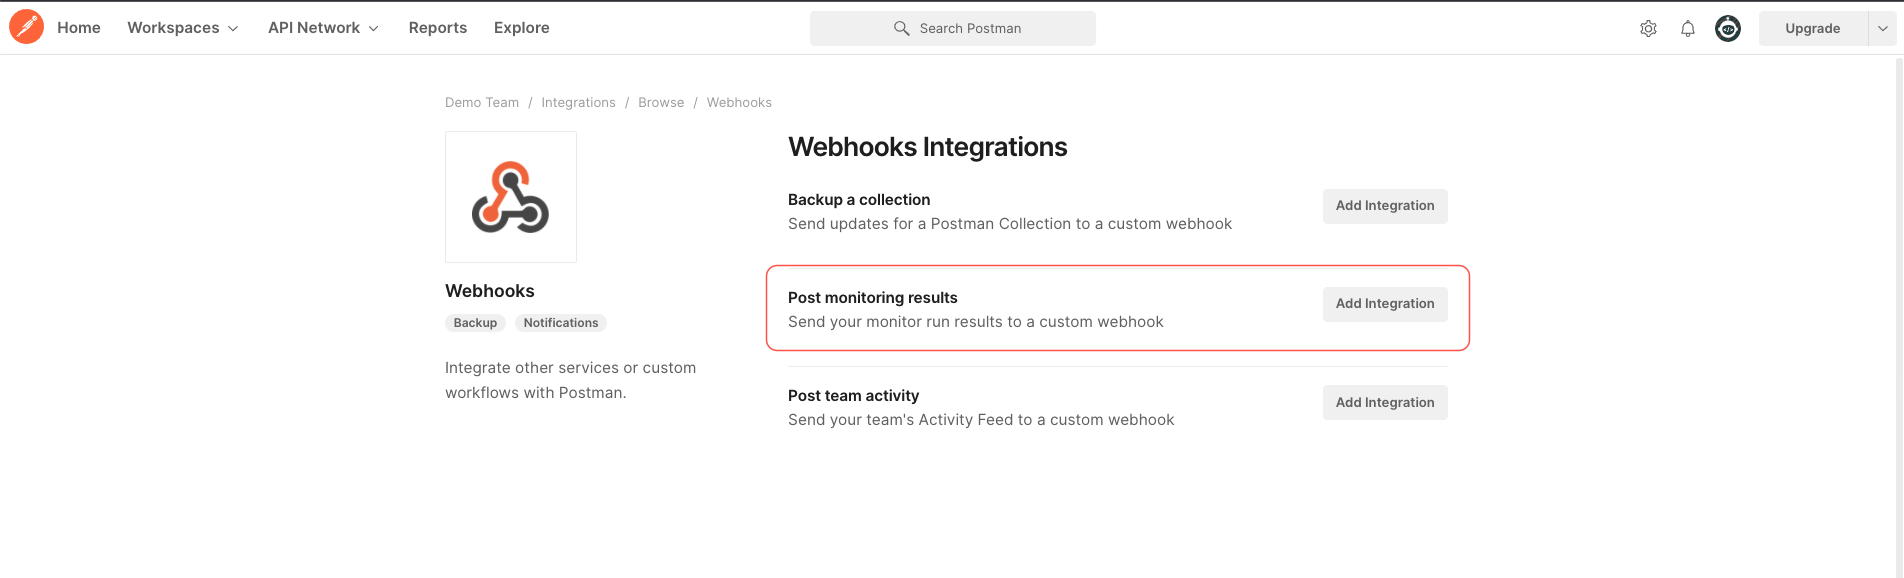 Webhooks Integrations page.